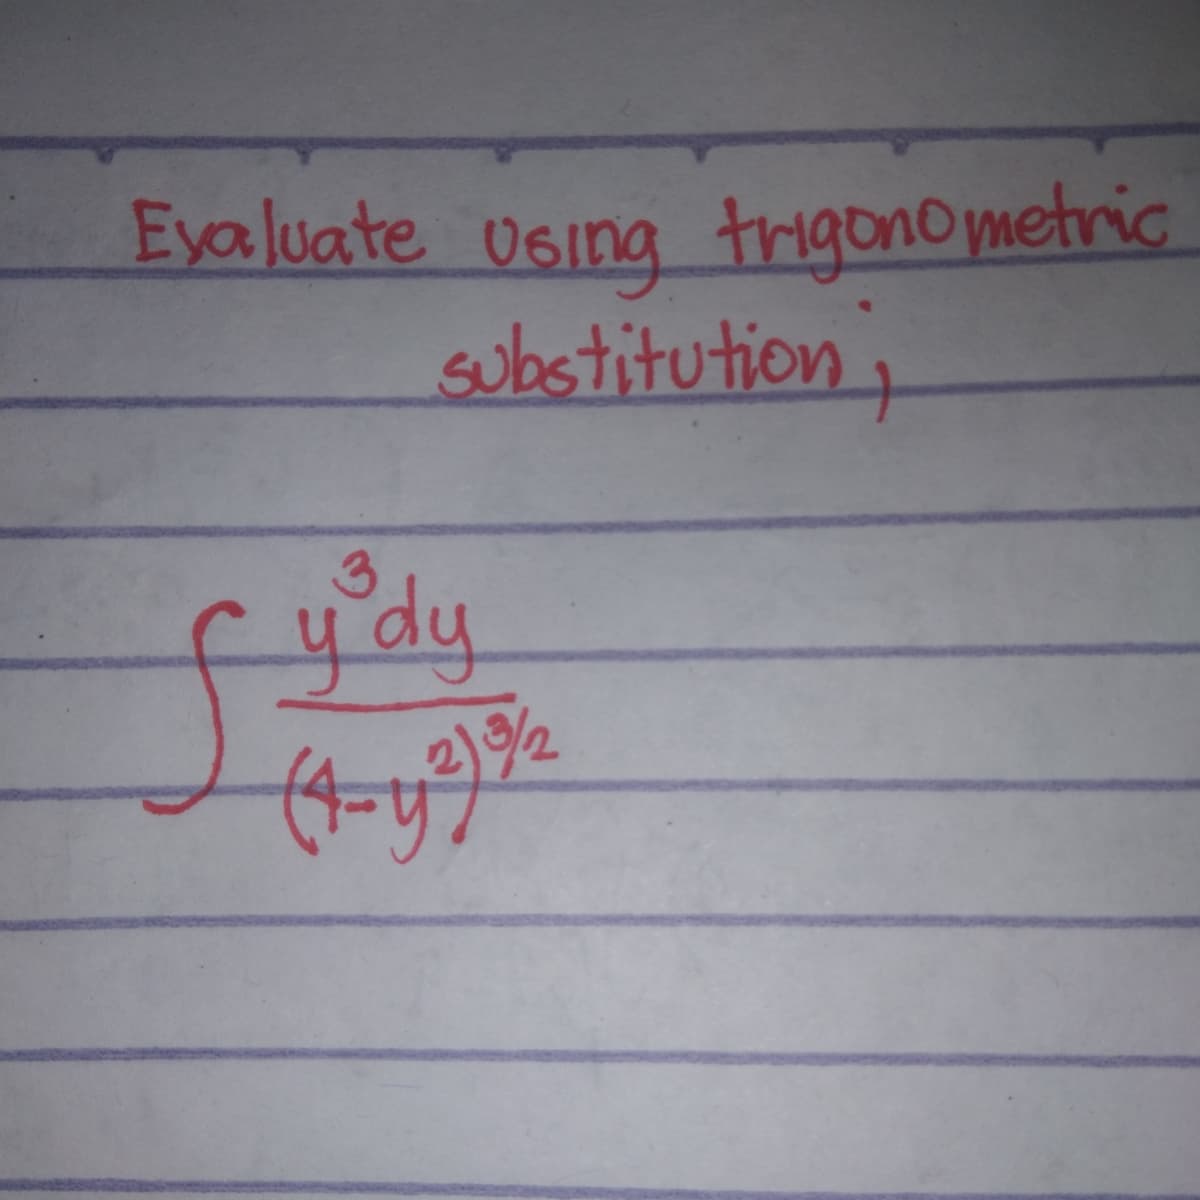 Eyaluate Using trigonometric
substitution,
3)
y'dy
